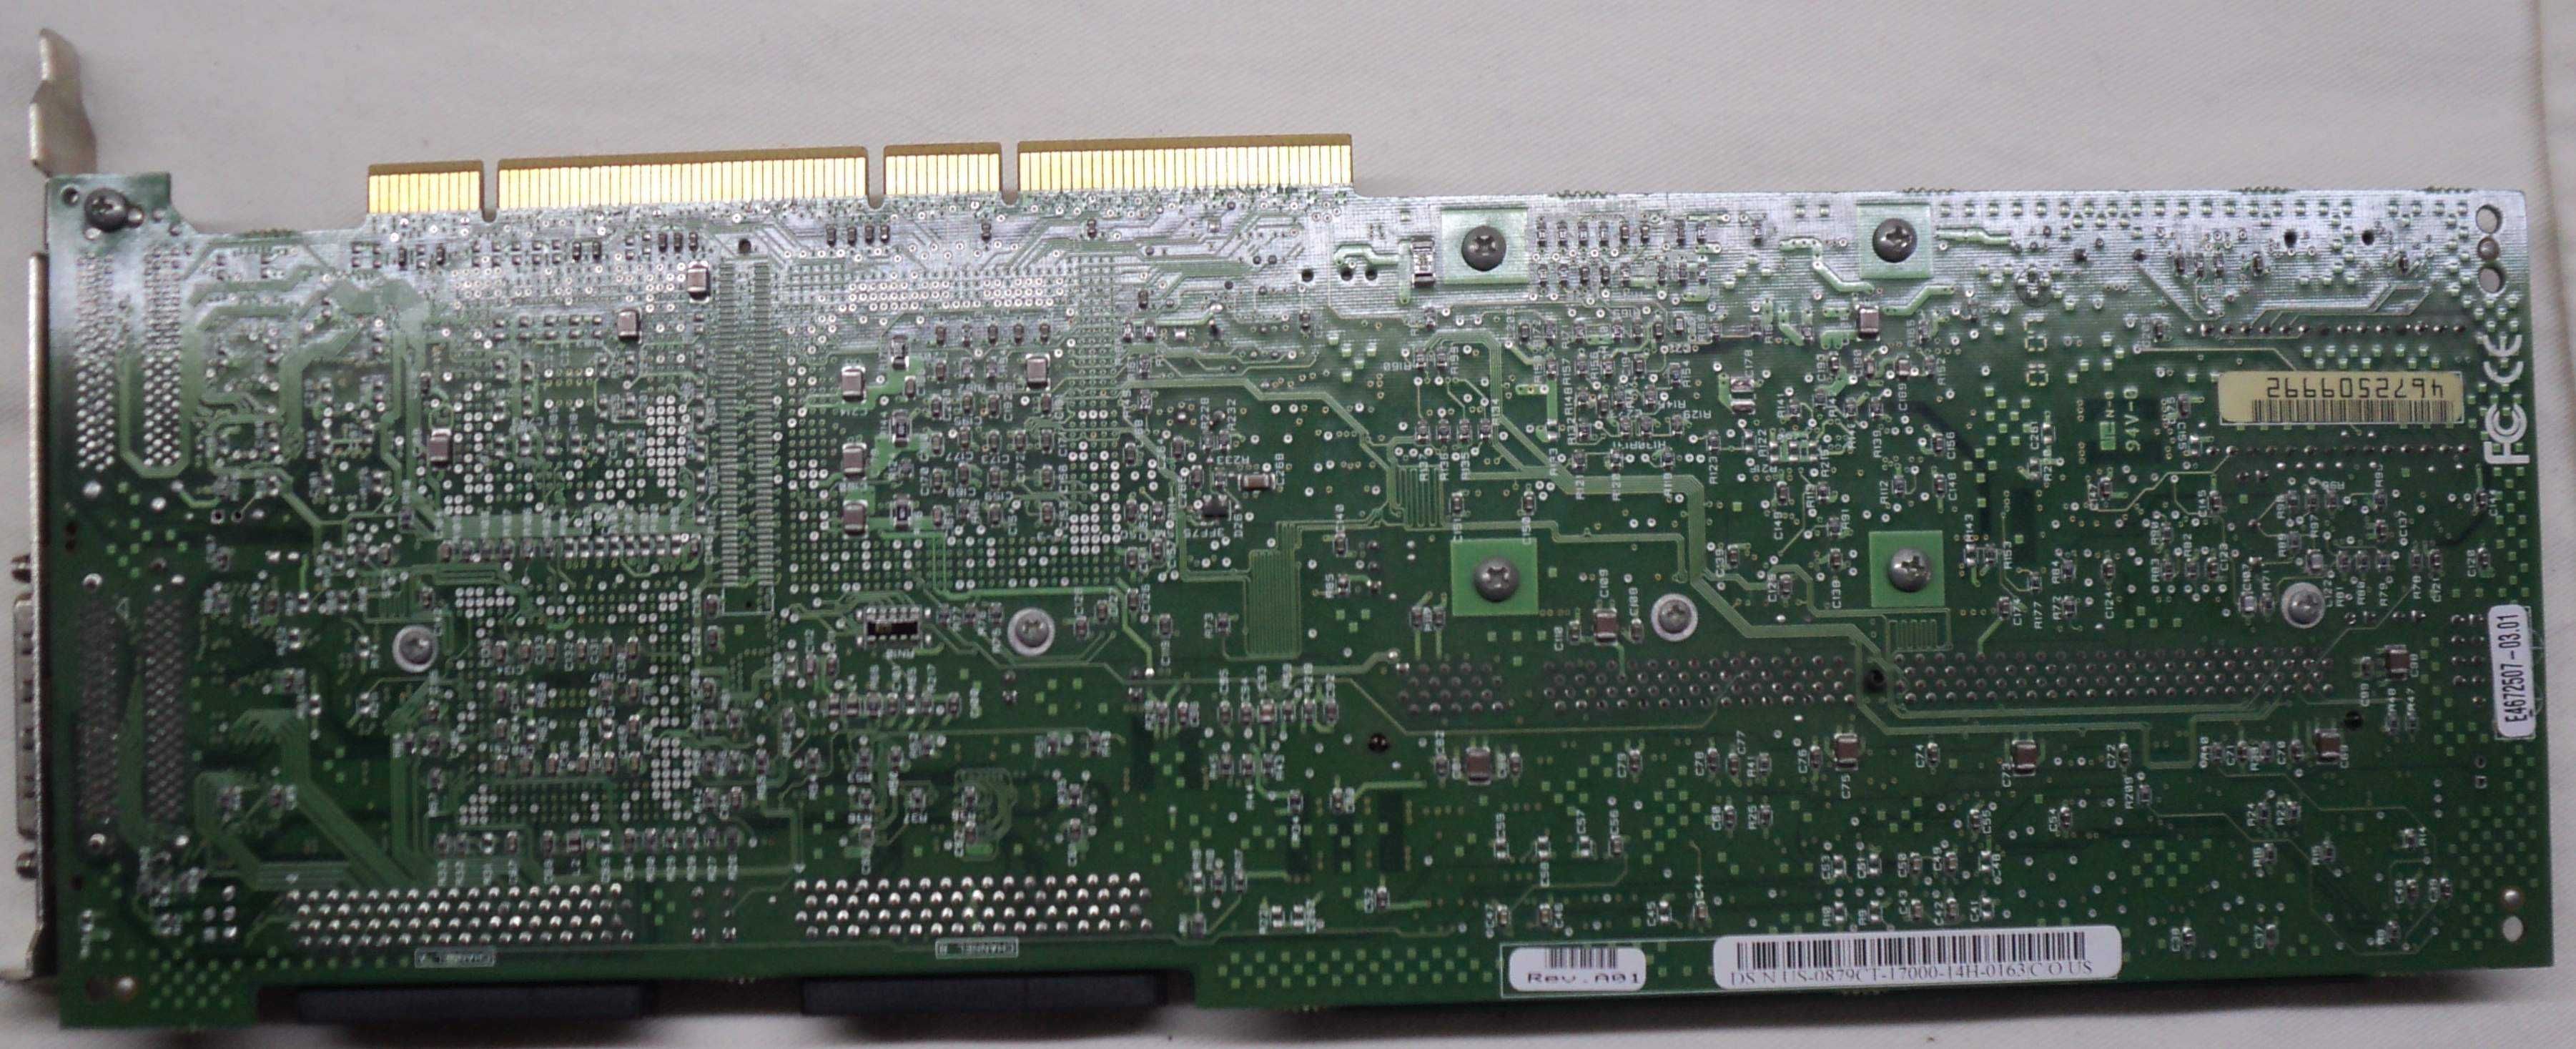 American Megatrends E4672507-02 Dual SCSI Raid Controller Series